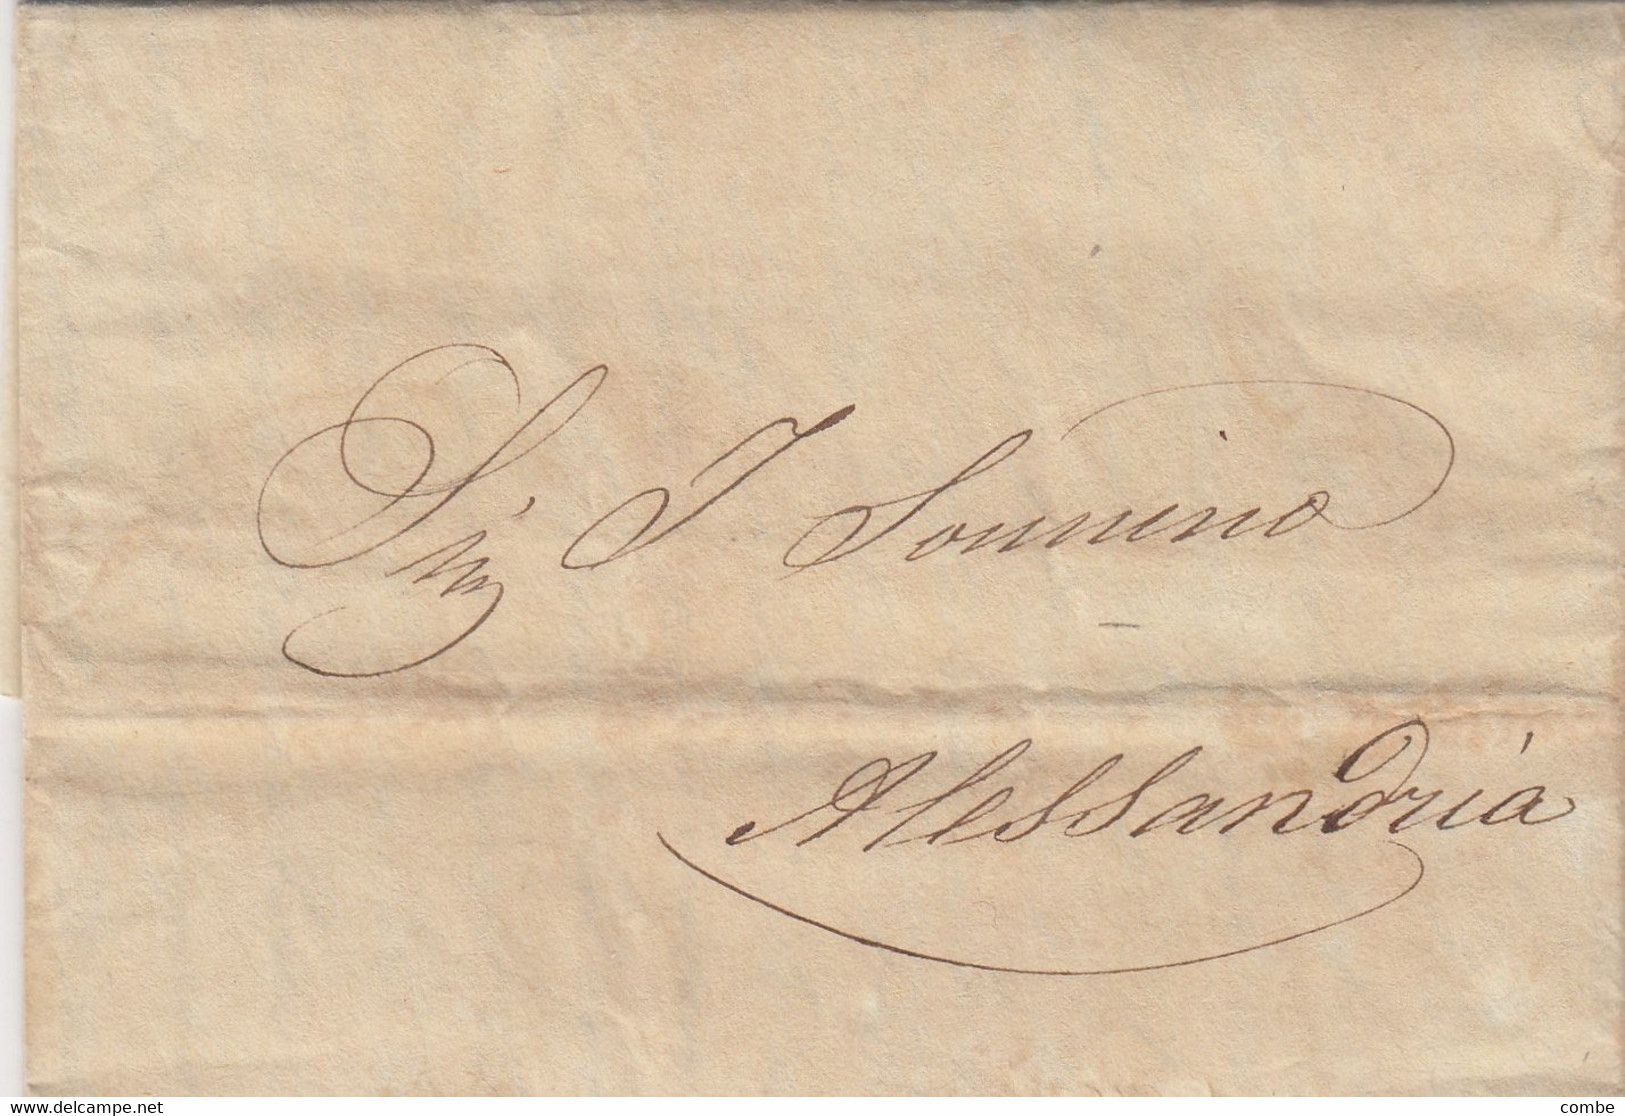 OLD LETTER. EGYPT. 6 2 1837. CAIRO TO J. SONNINO, ALESSANDRIA. TEXT IN ITALIAN - Prephilately